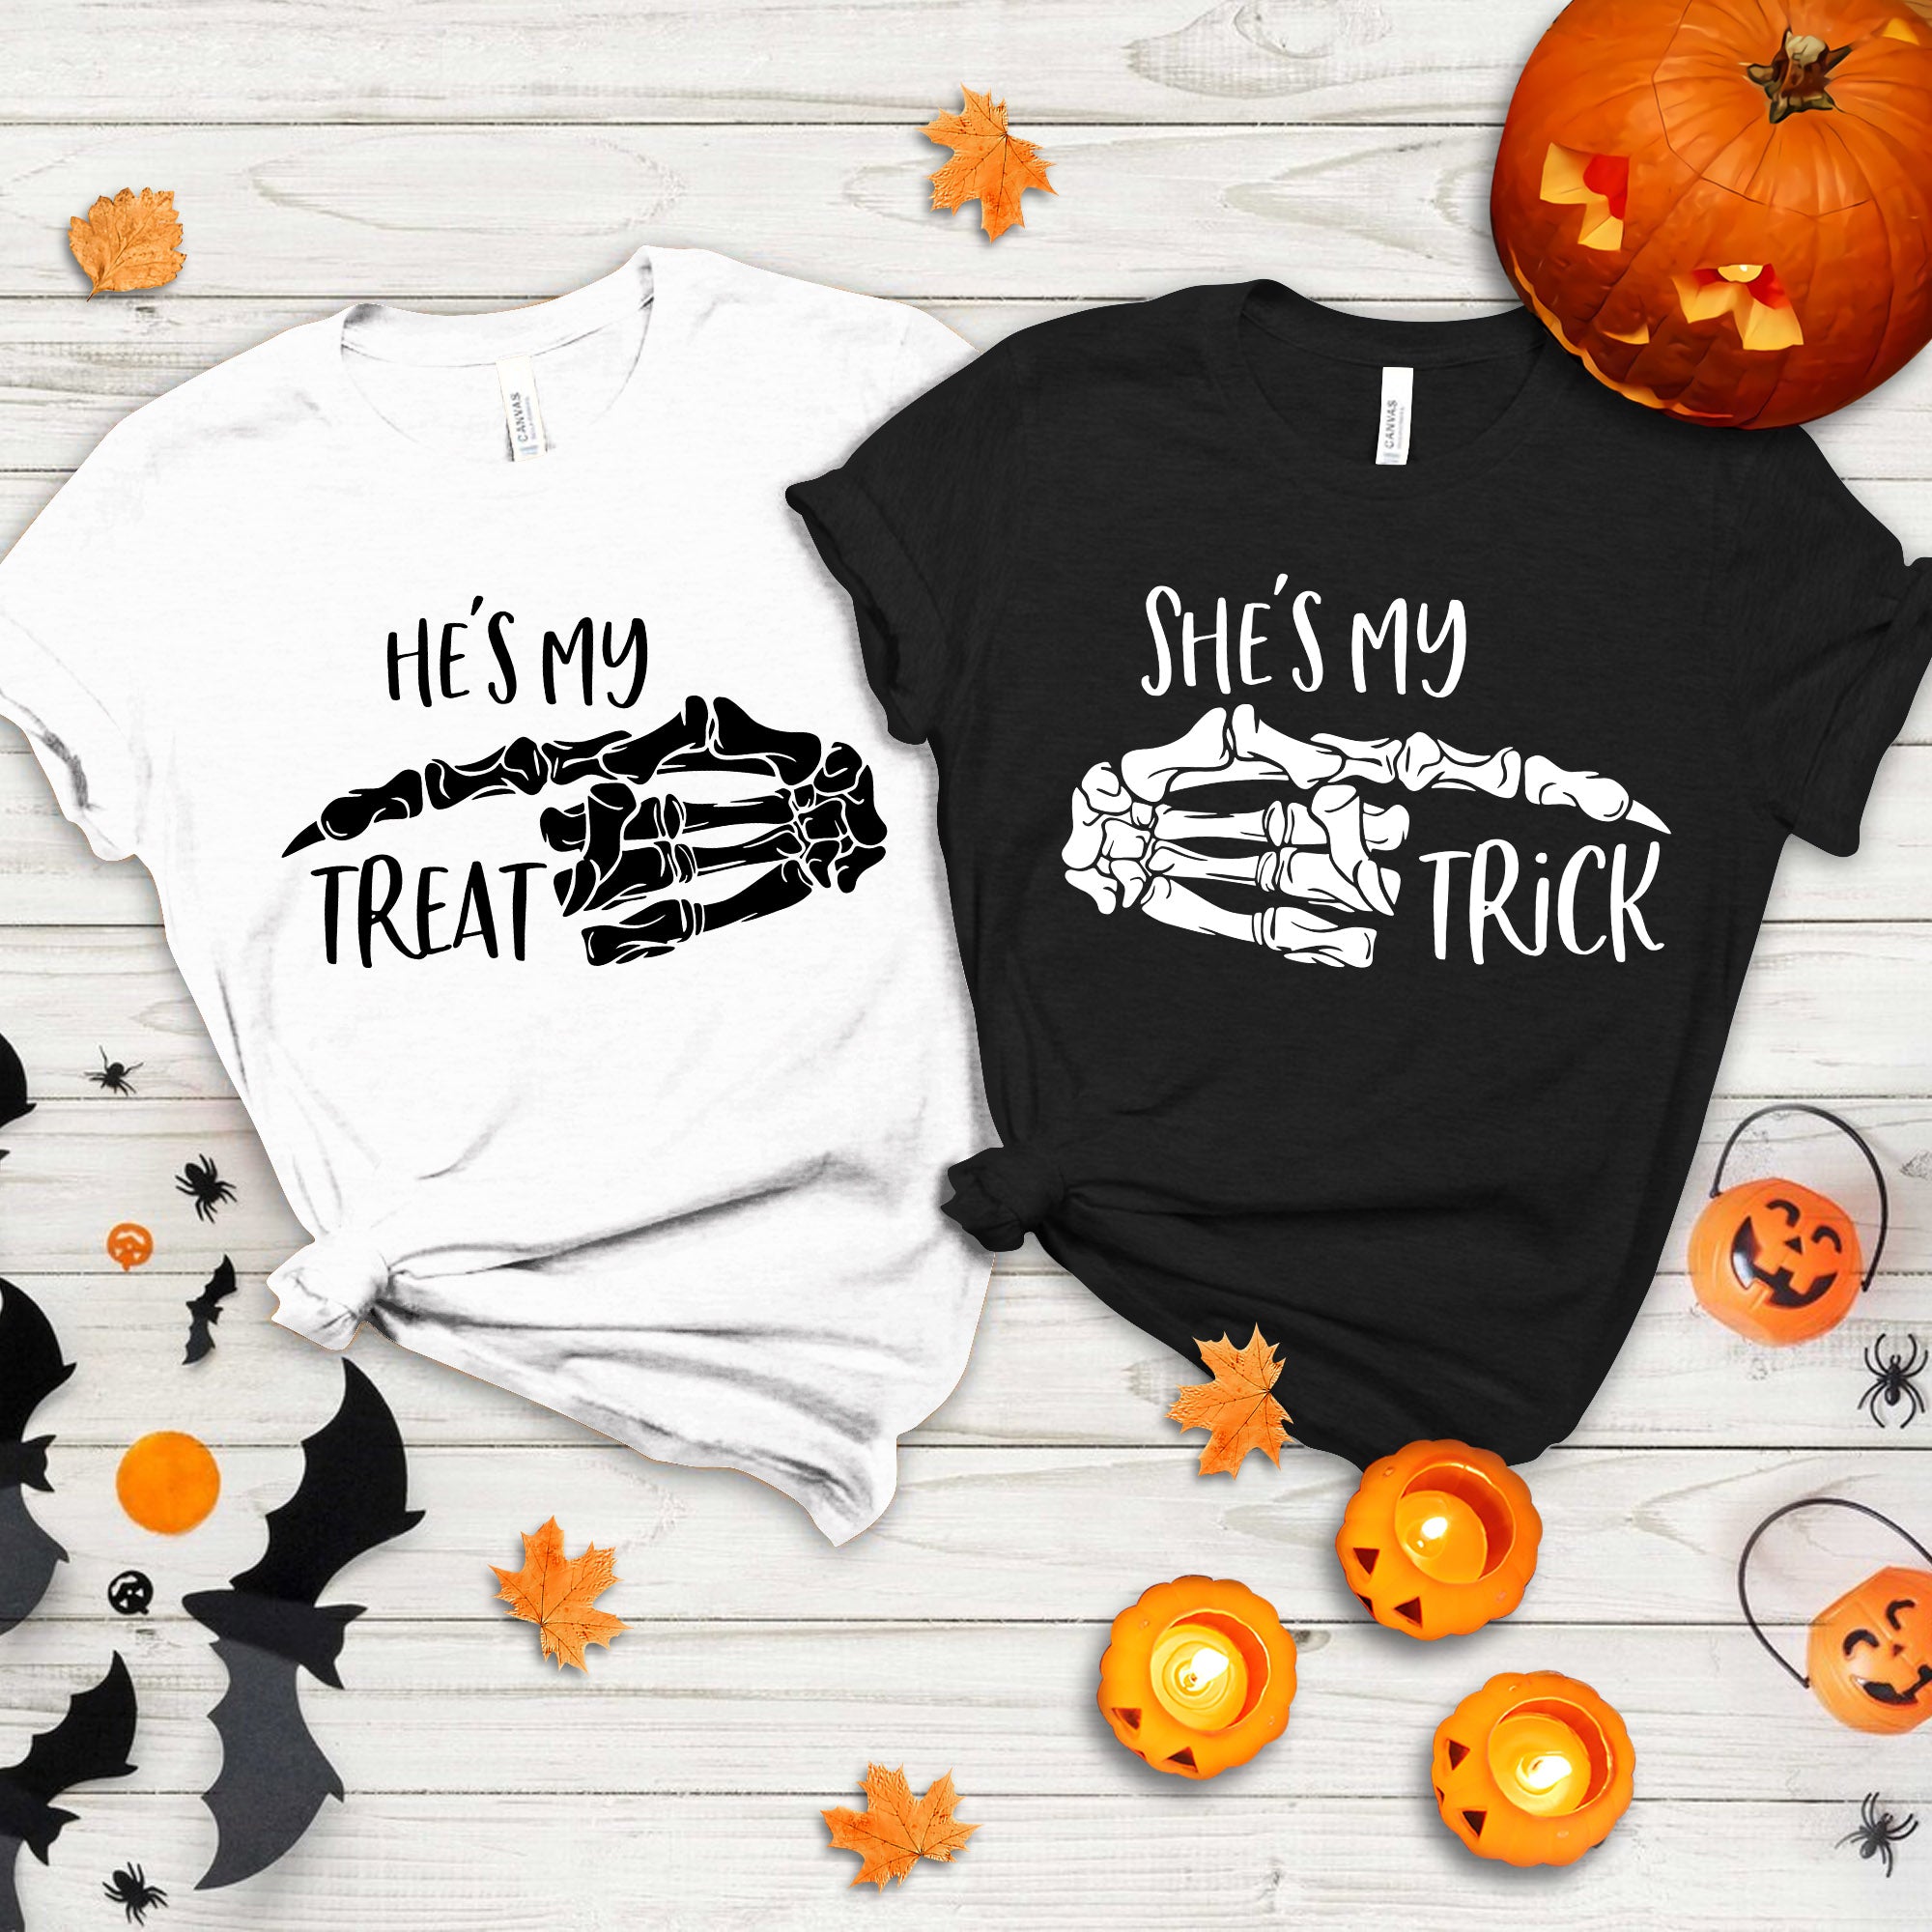 Halloween Couple Shirt – She Is My Trick, He Is My Treat